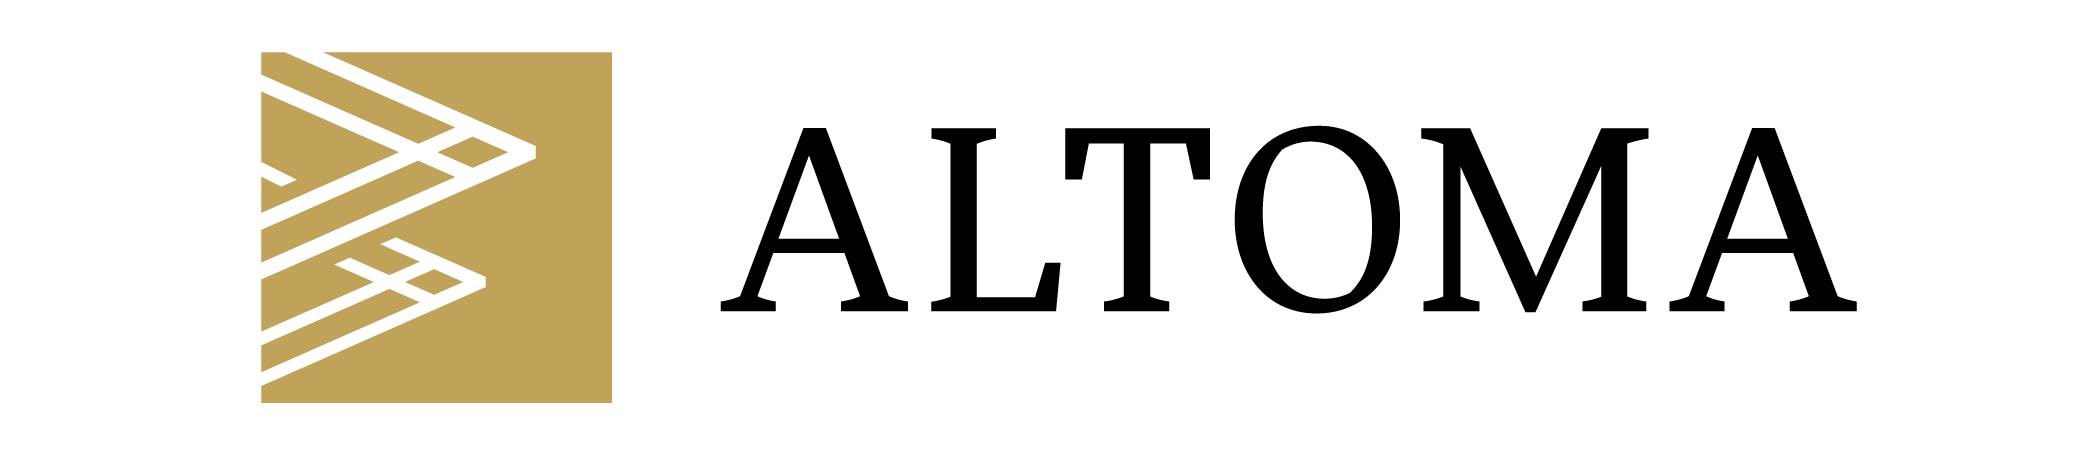 Altoma Real Estate Advisors LLC Announces Closing (2) CRE Loans for $6,000,000 & $5,700,000 in September & November 2015